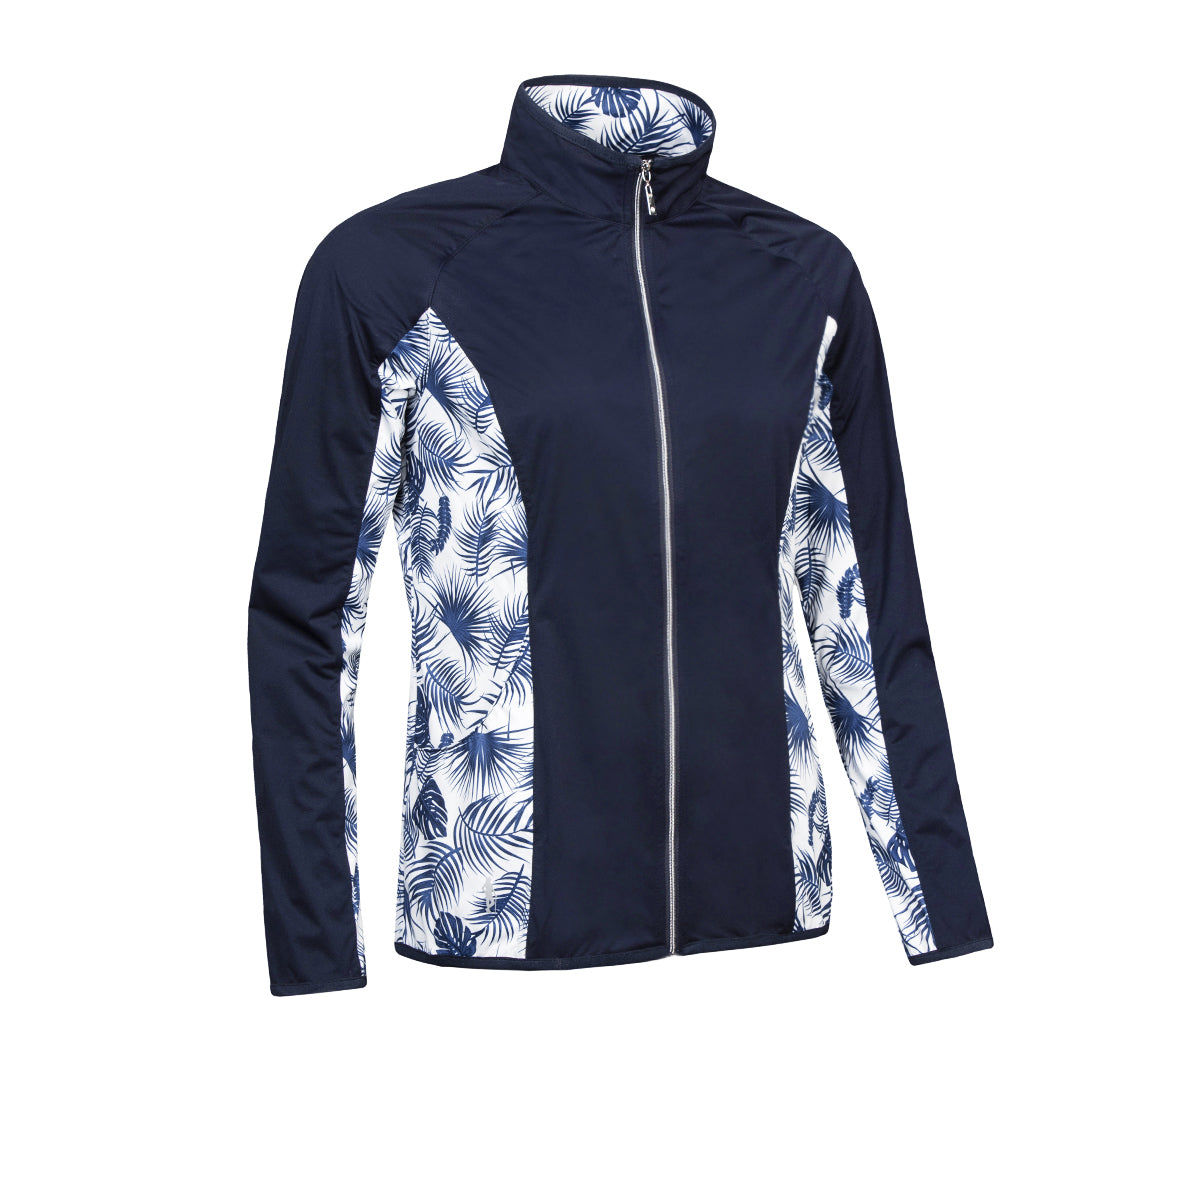 Glenmuir Ladies Lightweight Showerproof Performance Golf Jacket in Navy & White Tropical Print